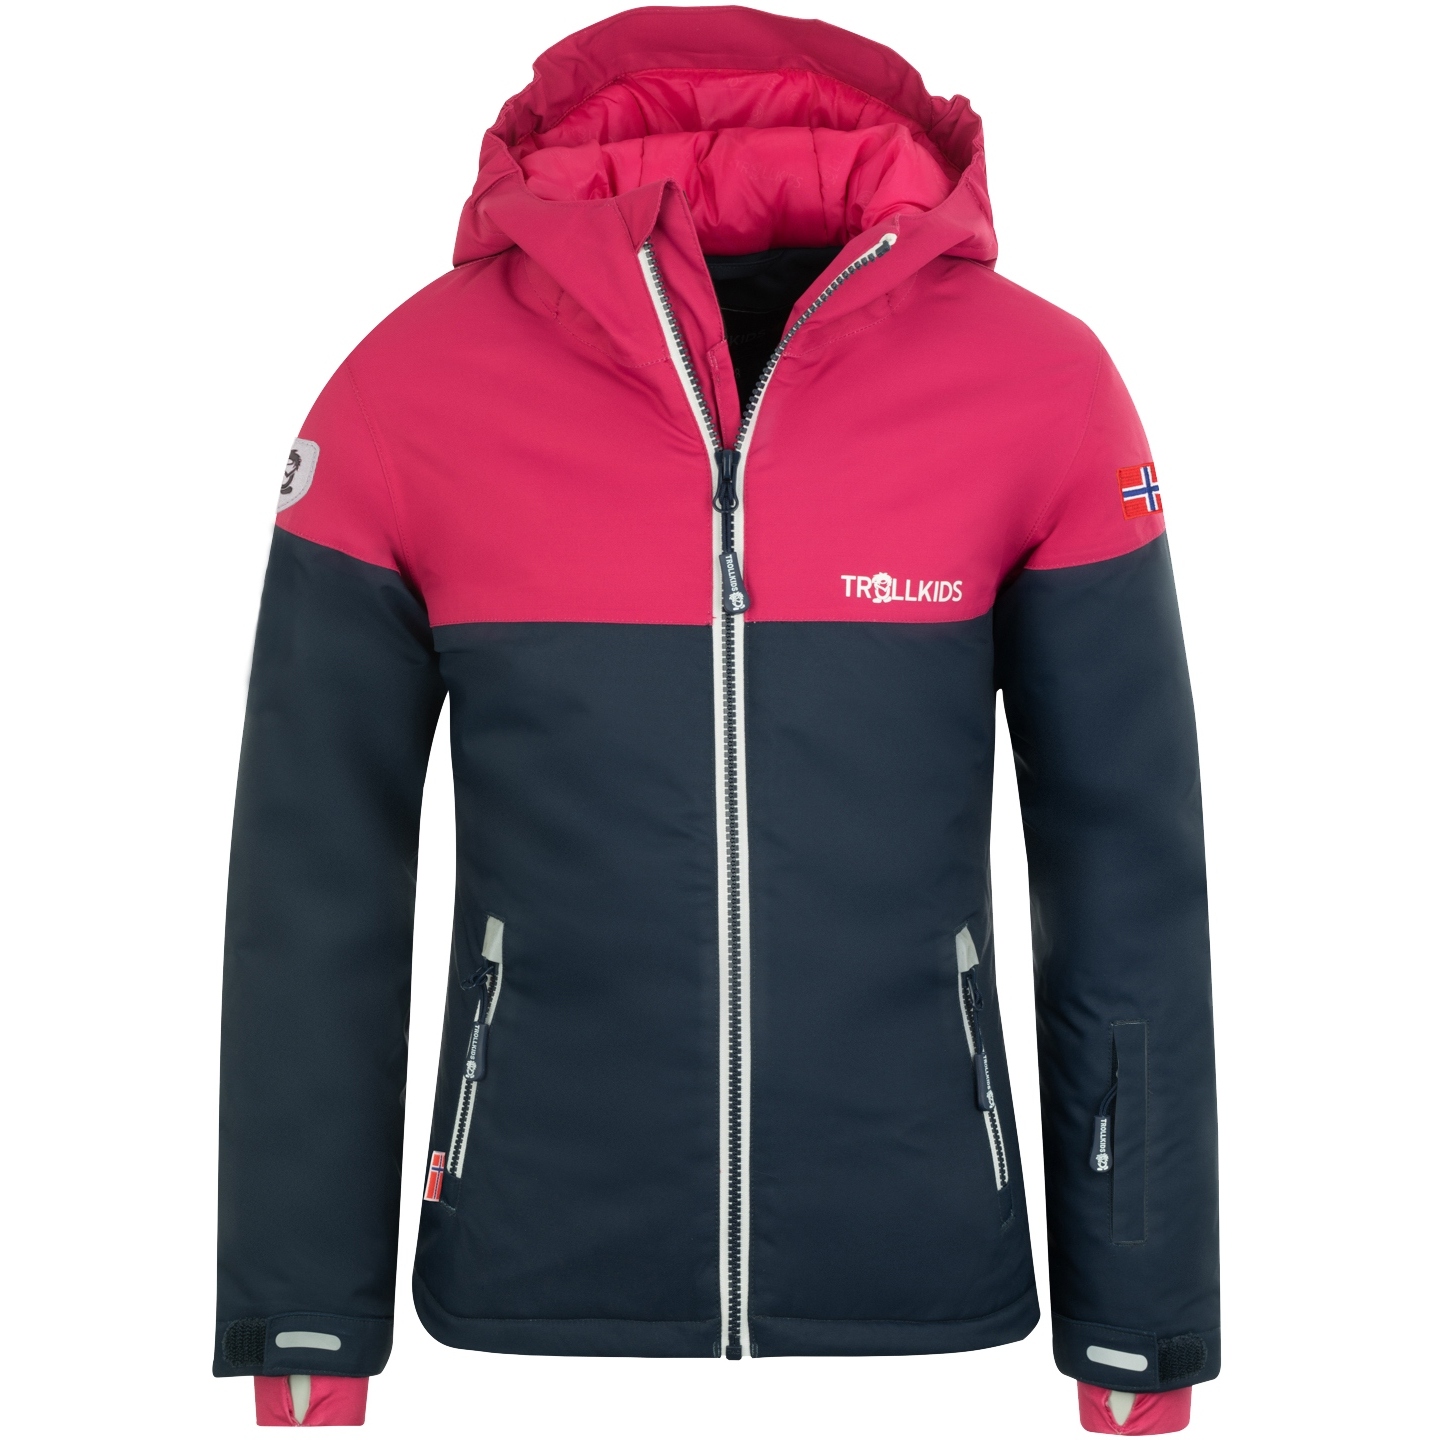 Productfoto van Trollkids Hallingdal Ski Jacket Girls - Navy/Pink/White